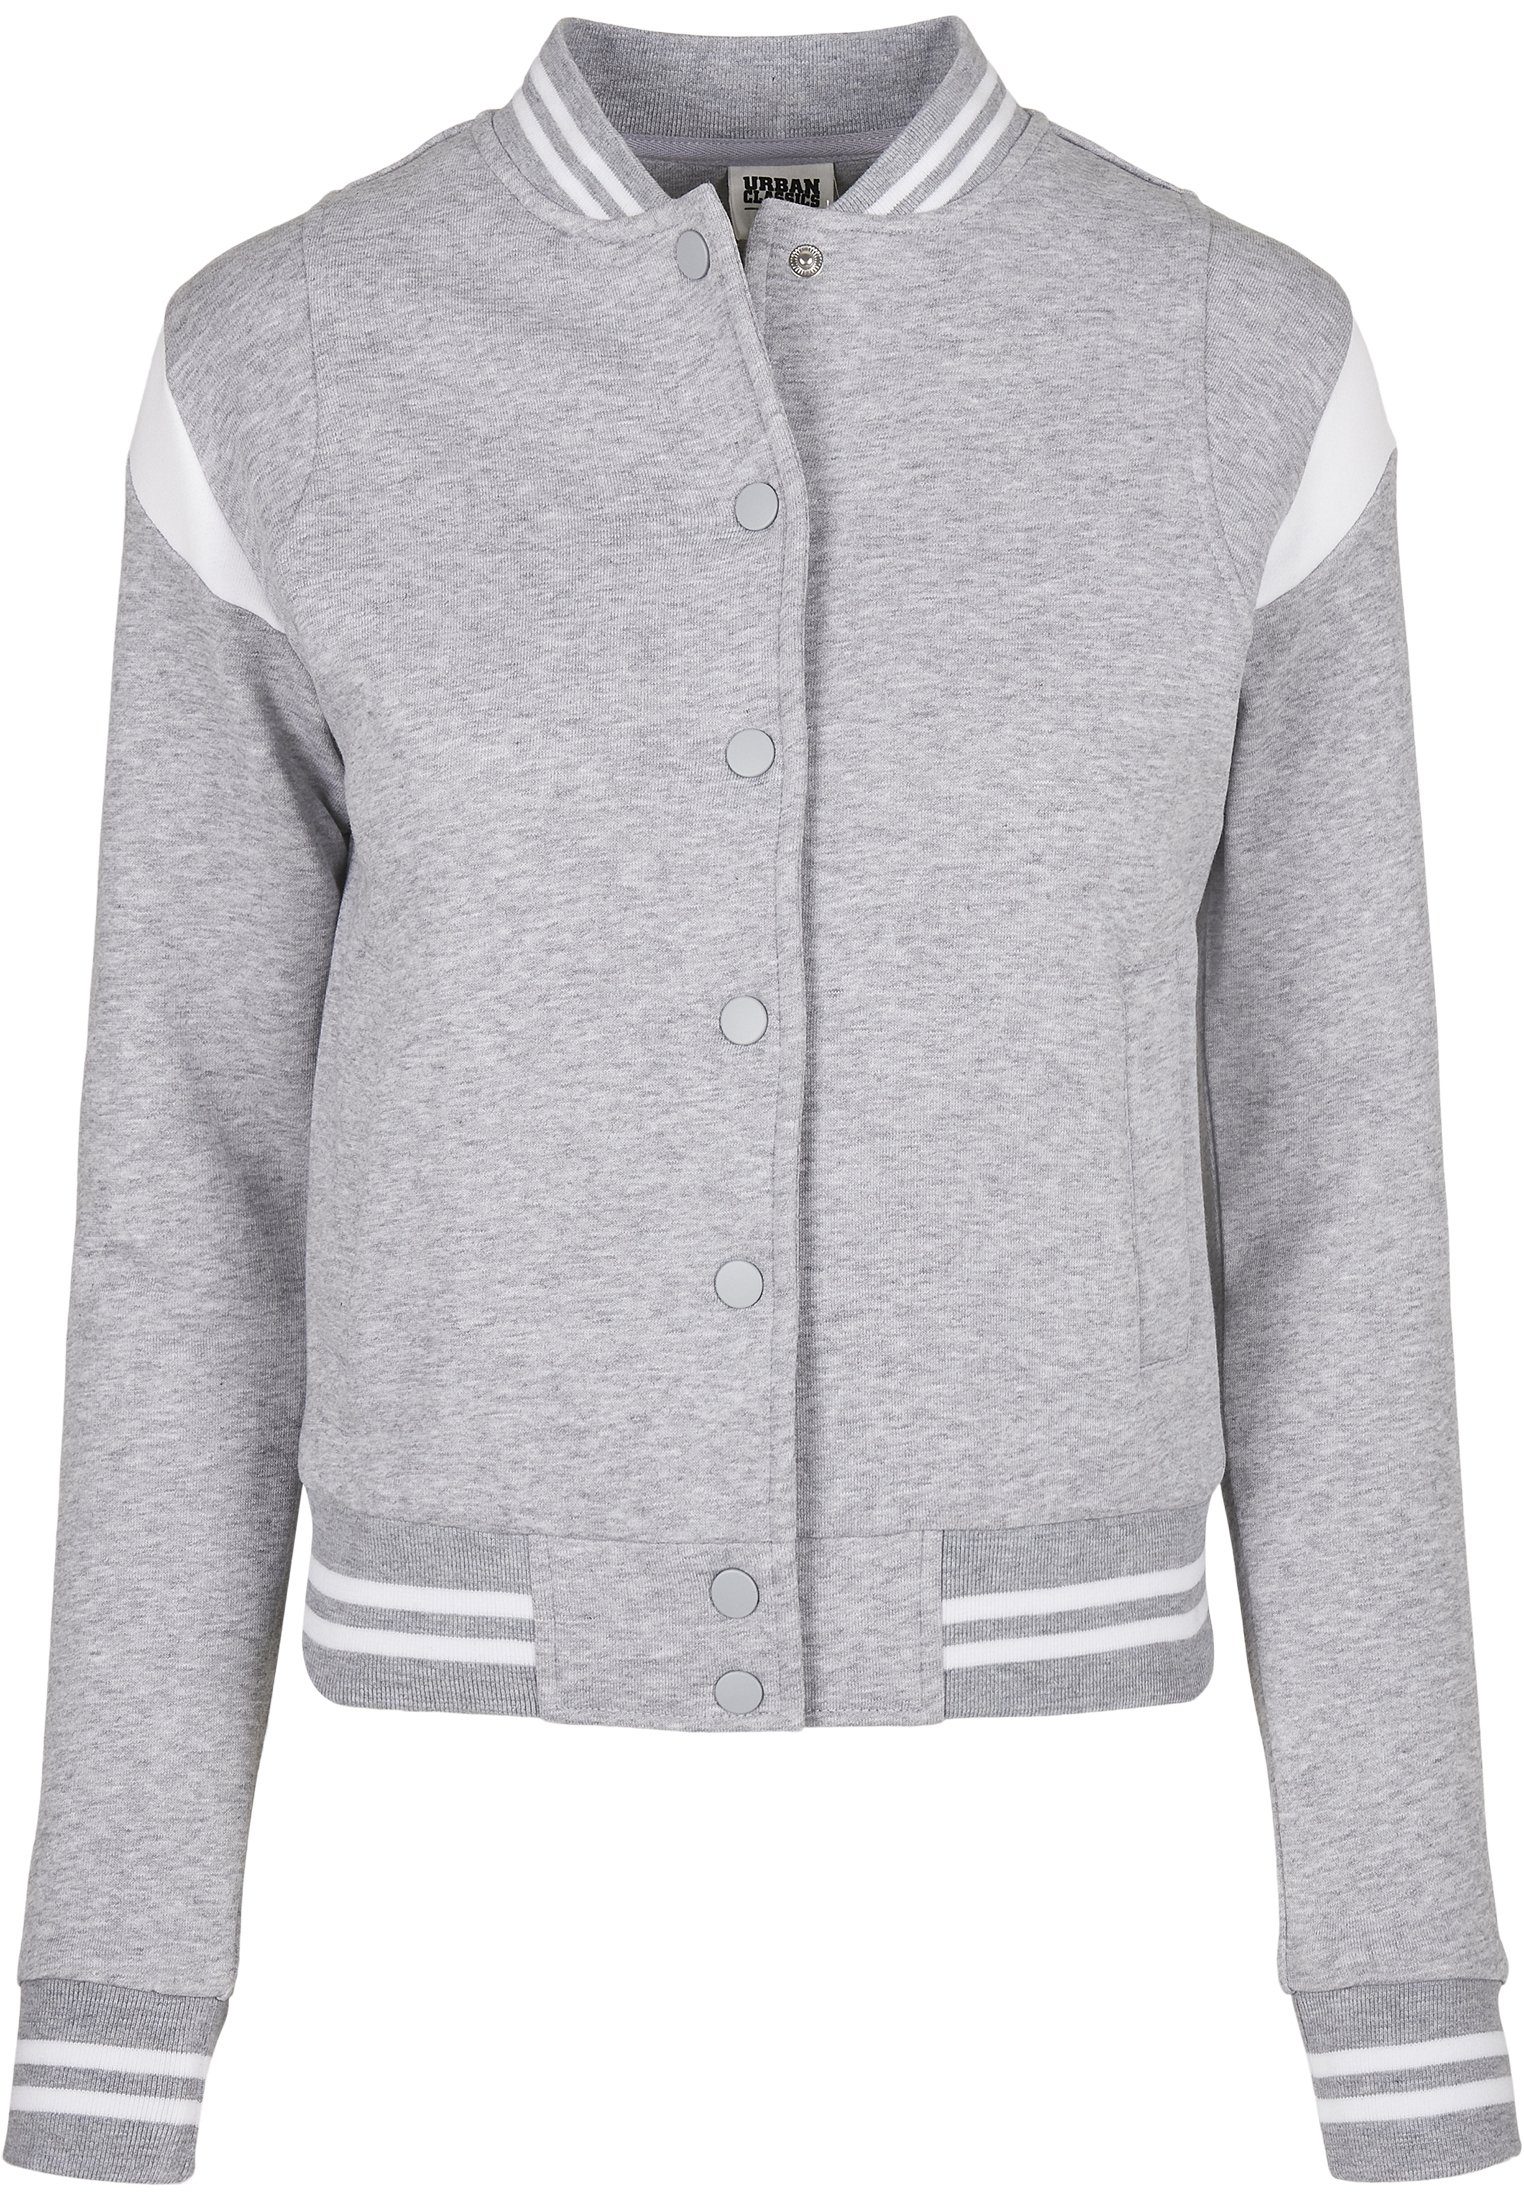 CLASSICS Jacket Ladies Sweat (1-St) Inset URBAN Damen Organic grey/white Collegejacke College